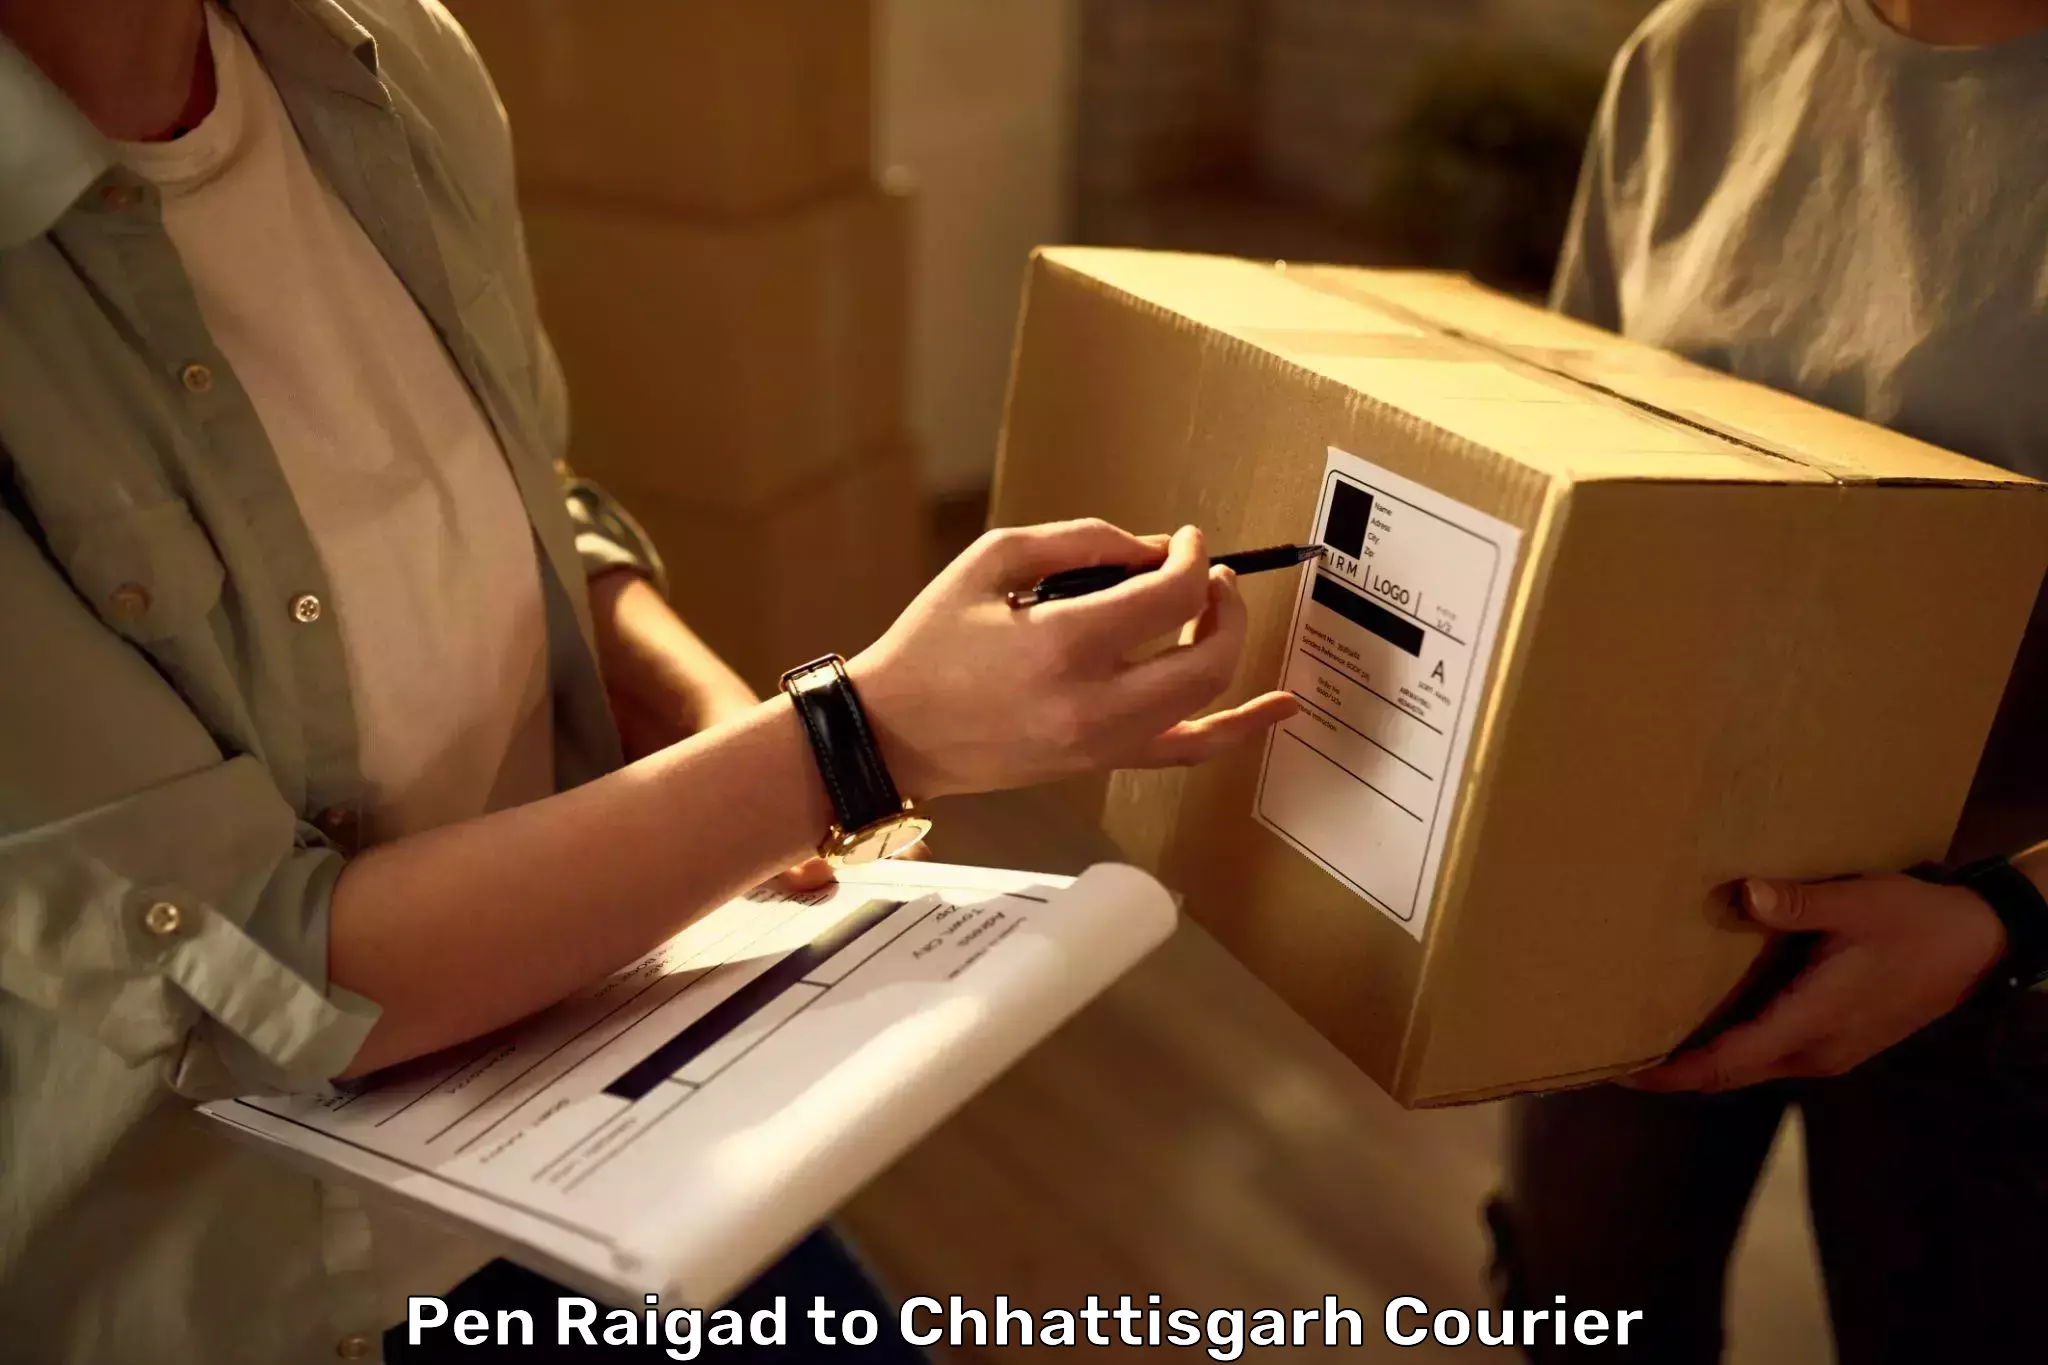 Express luggage delivery Pen Raigad to Bijapur Chhattisgarh